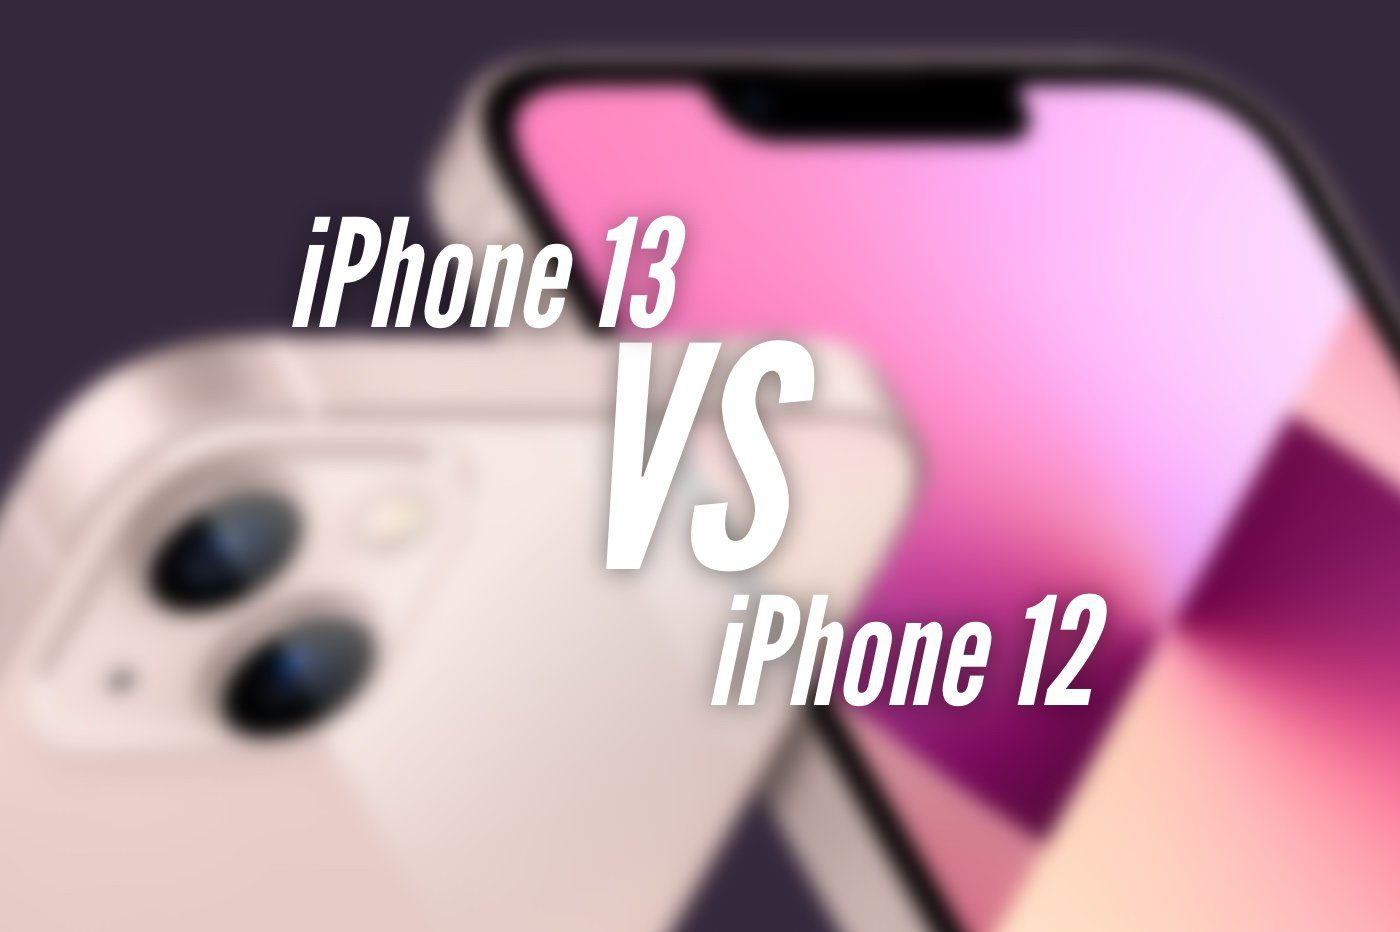 iphone 13 vs iphone 12 1